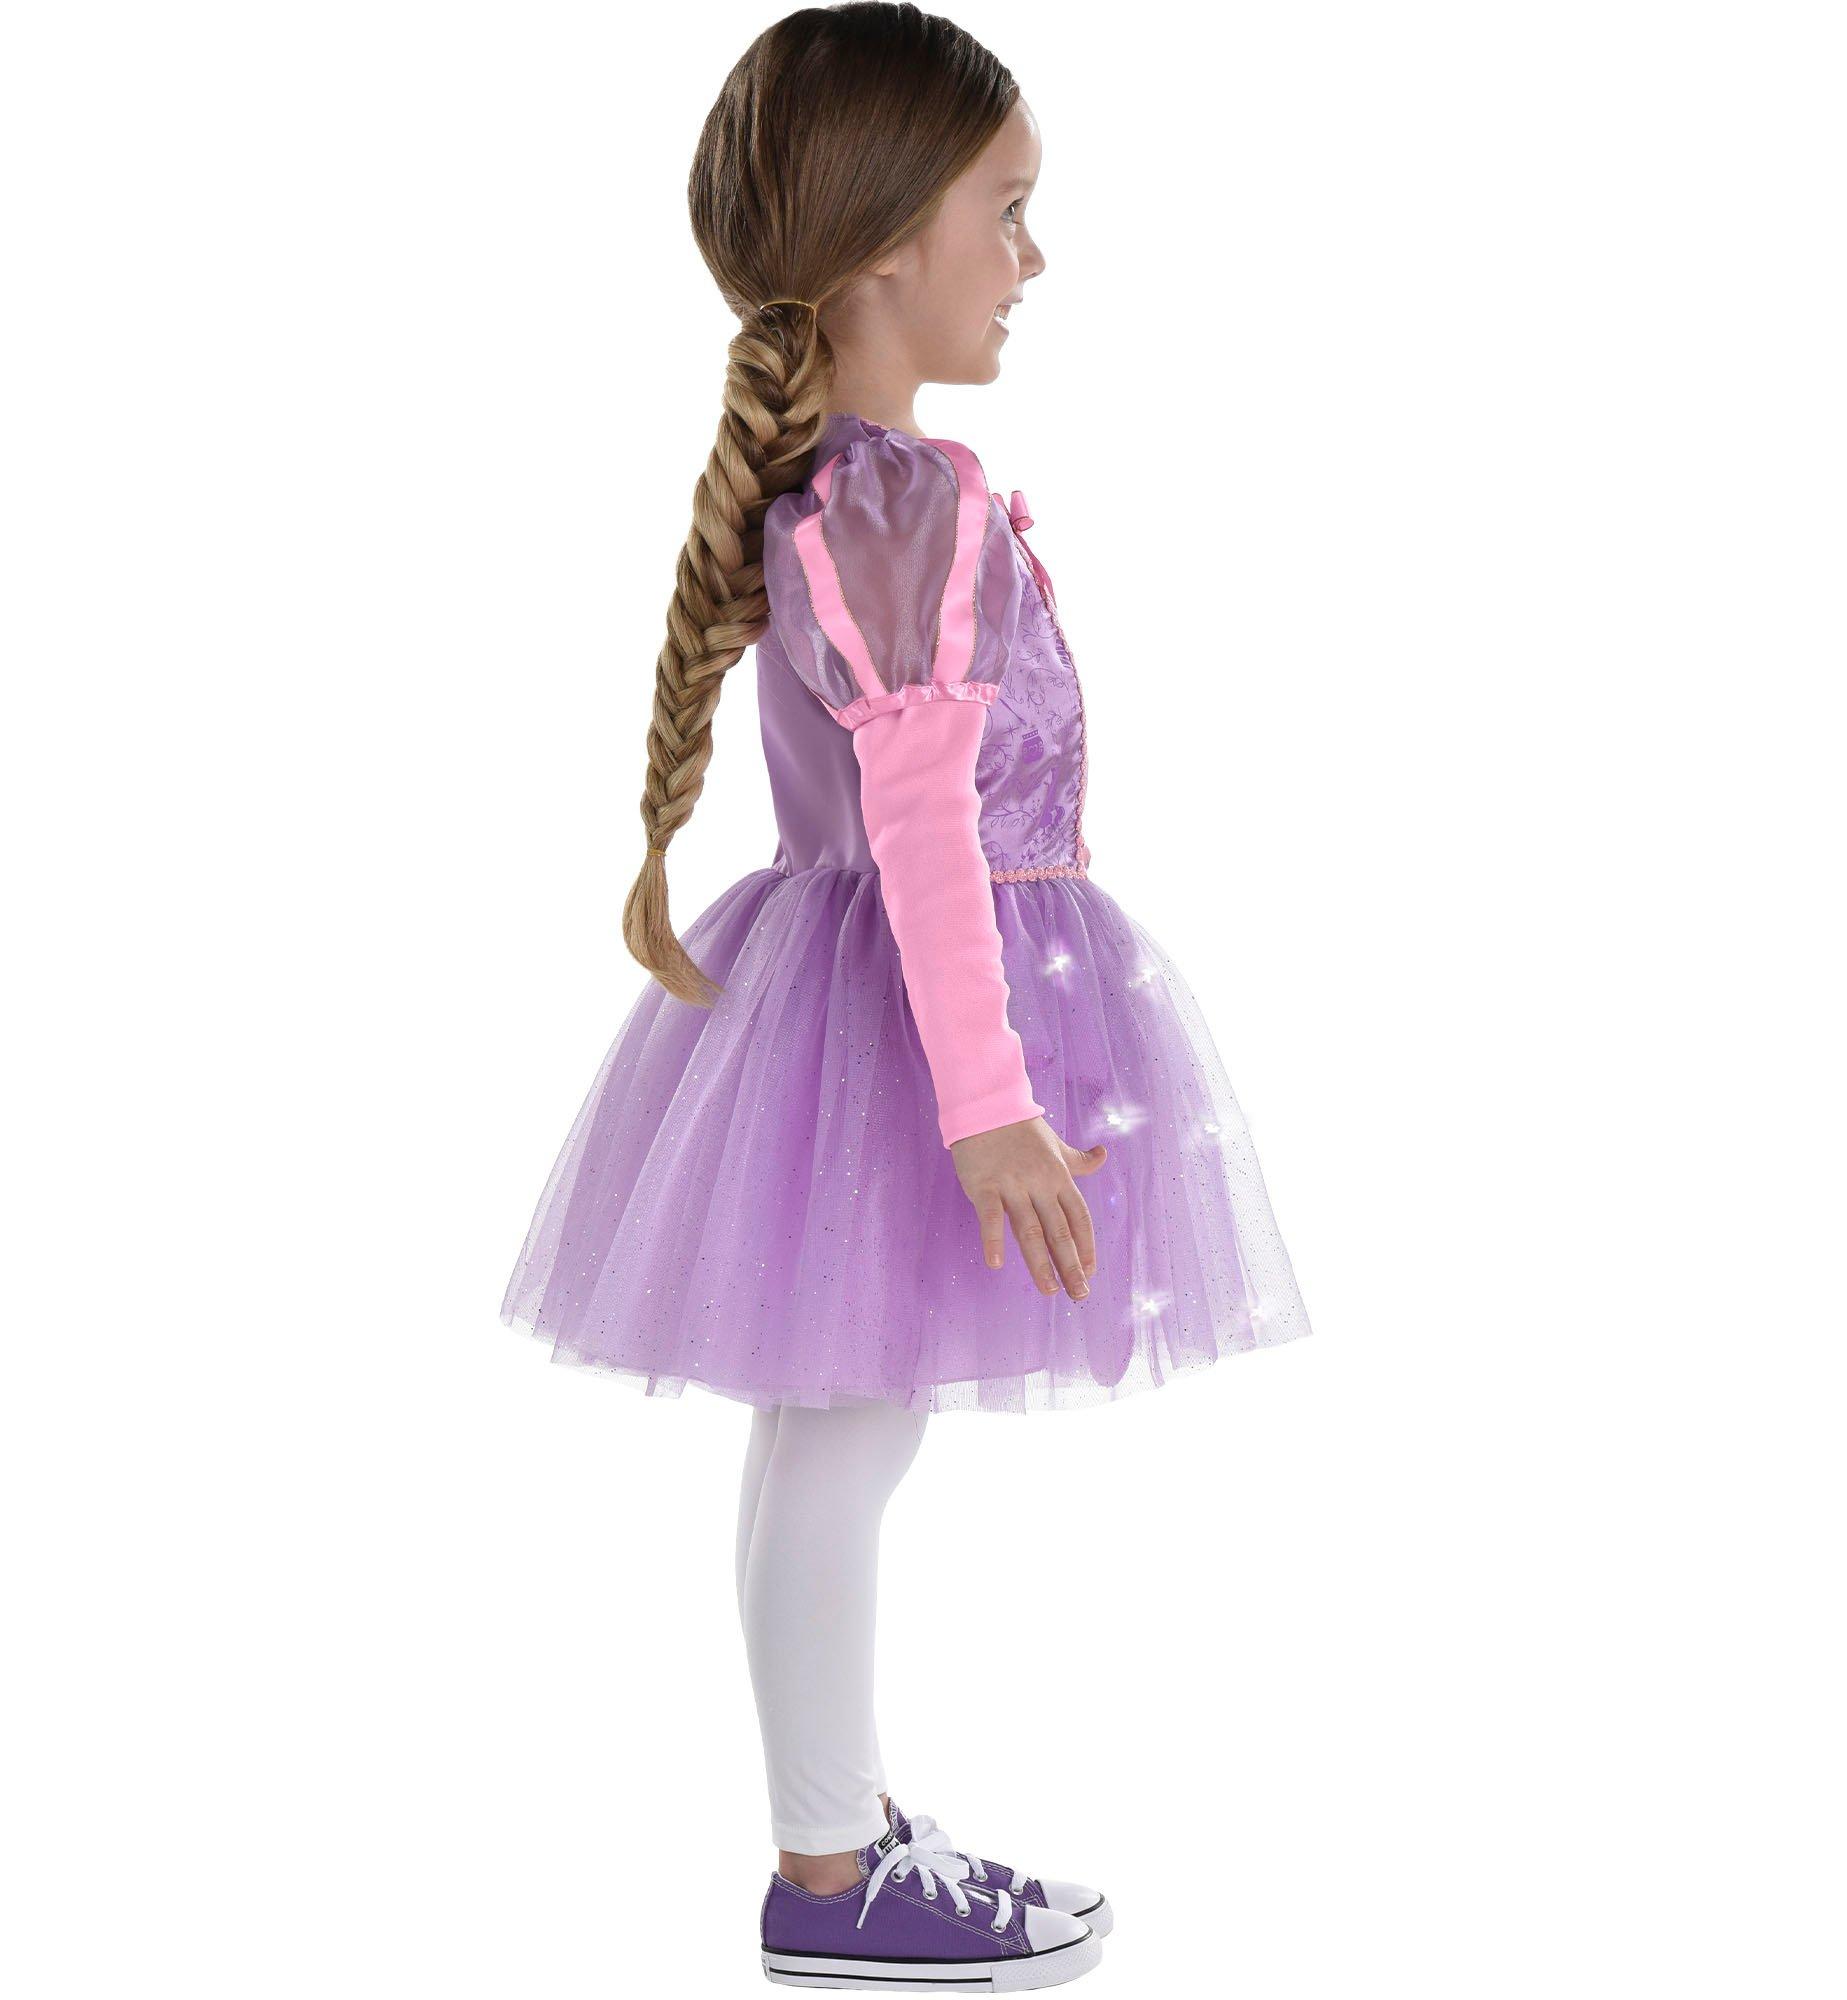 Kids' Light-Up Rapunzel Costume - Disney Tangled